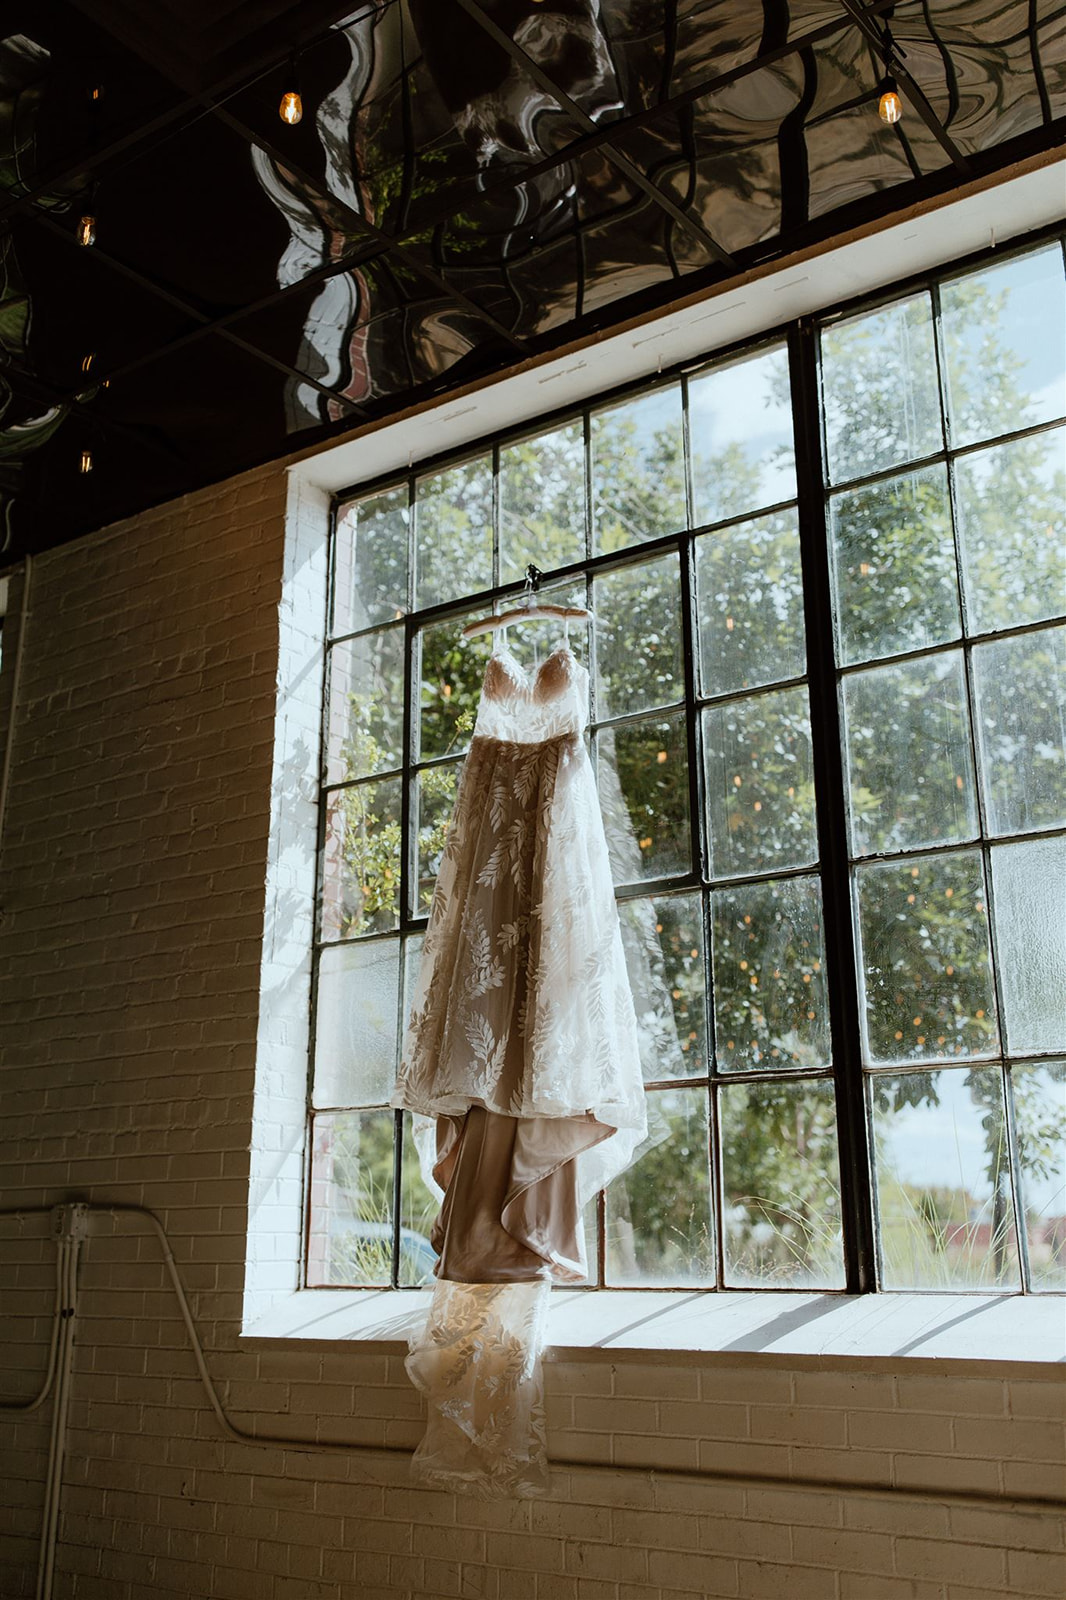 Wedding dress hangs from an industrial window